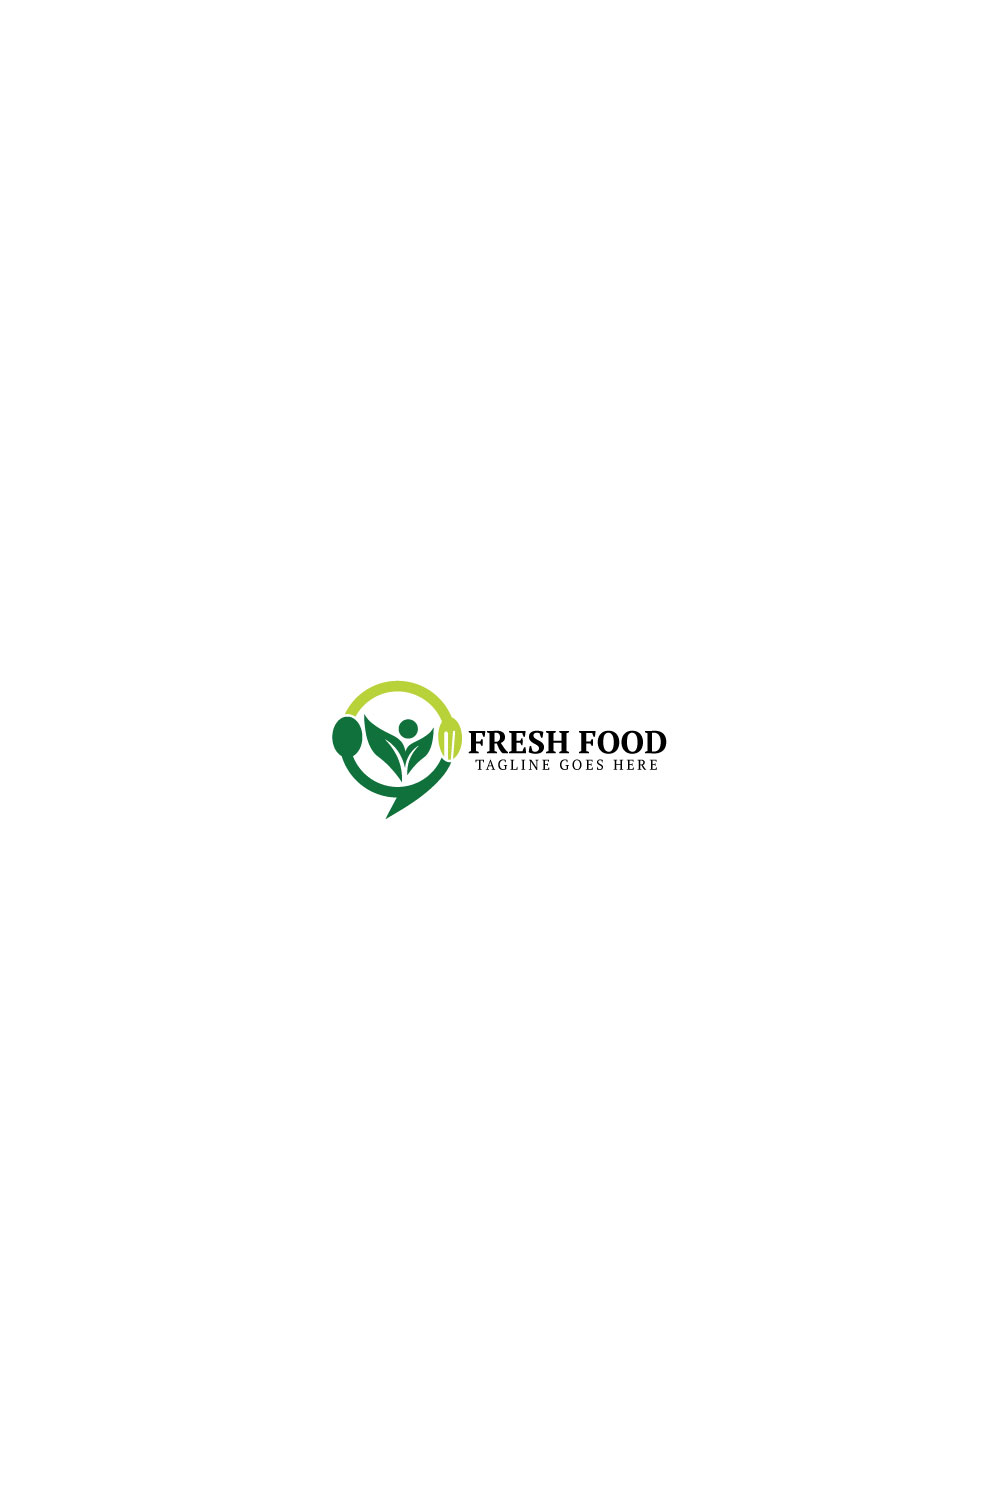 Fresh food logo design pinterest preview image.